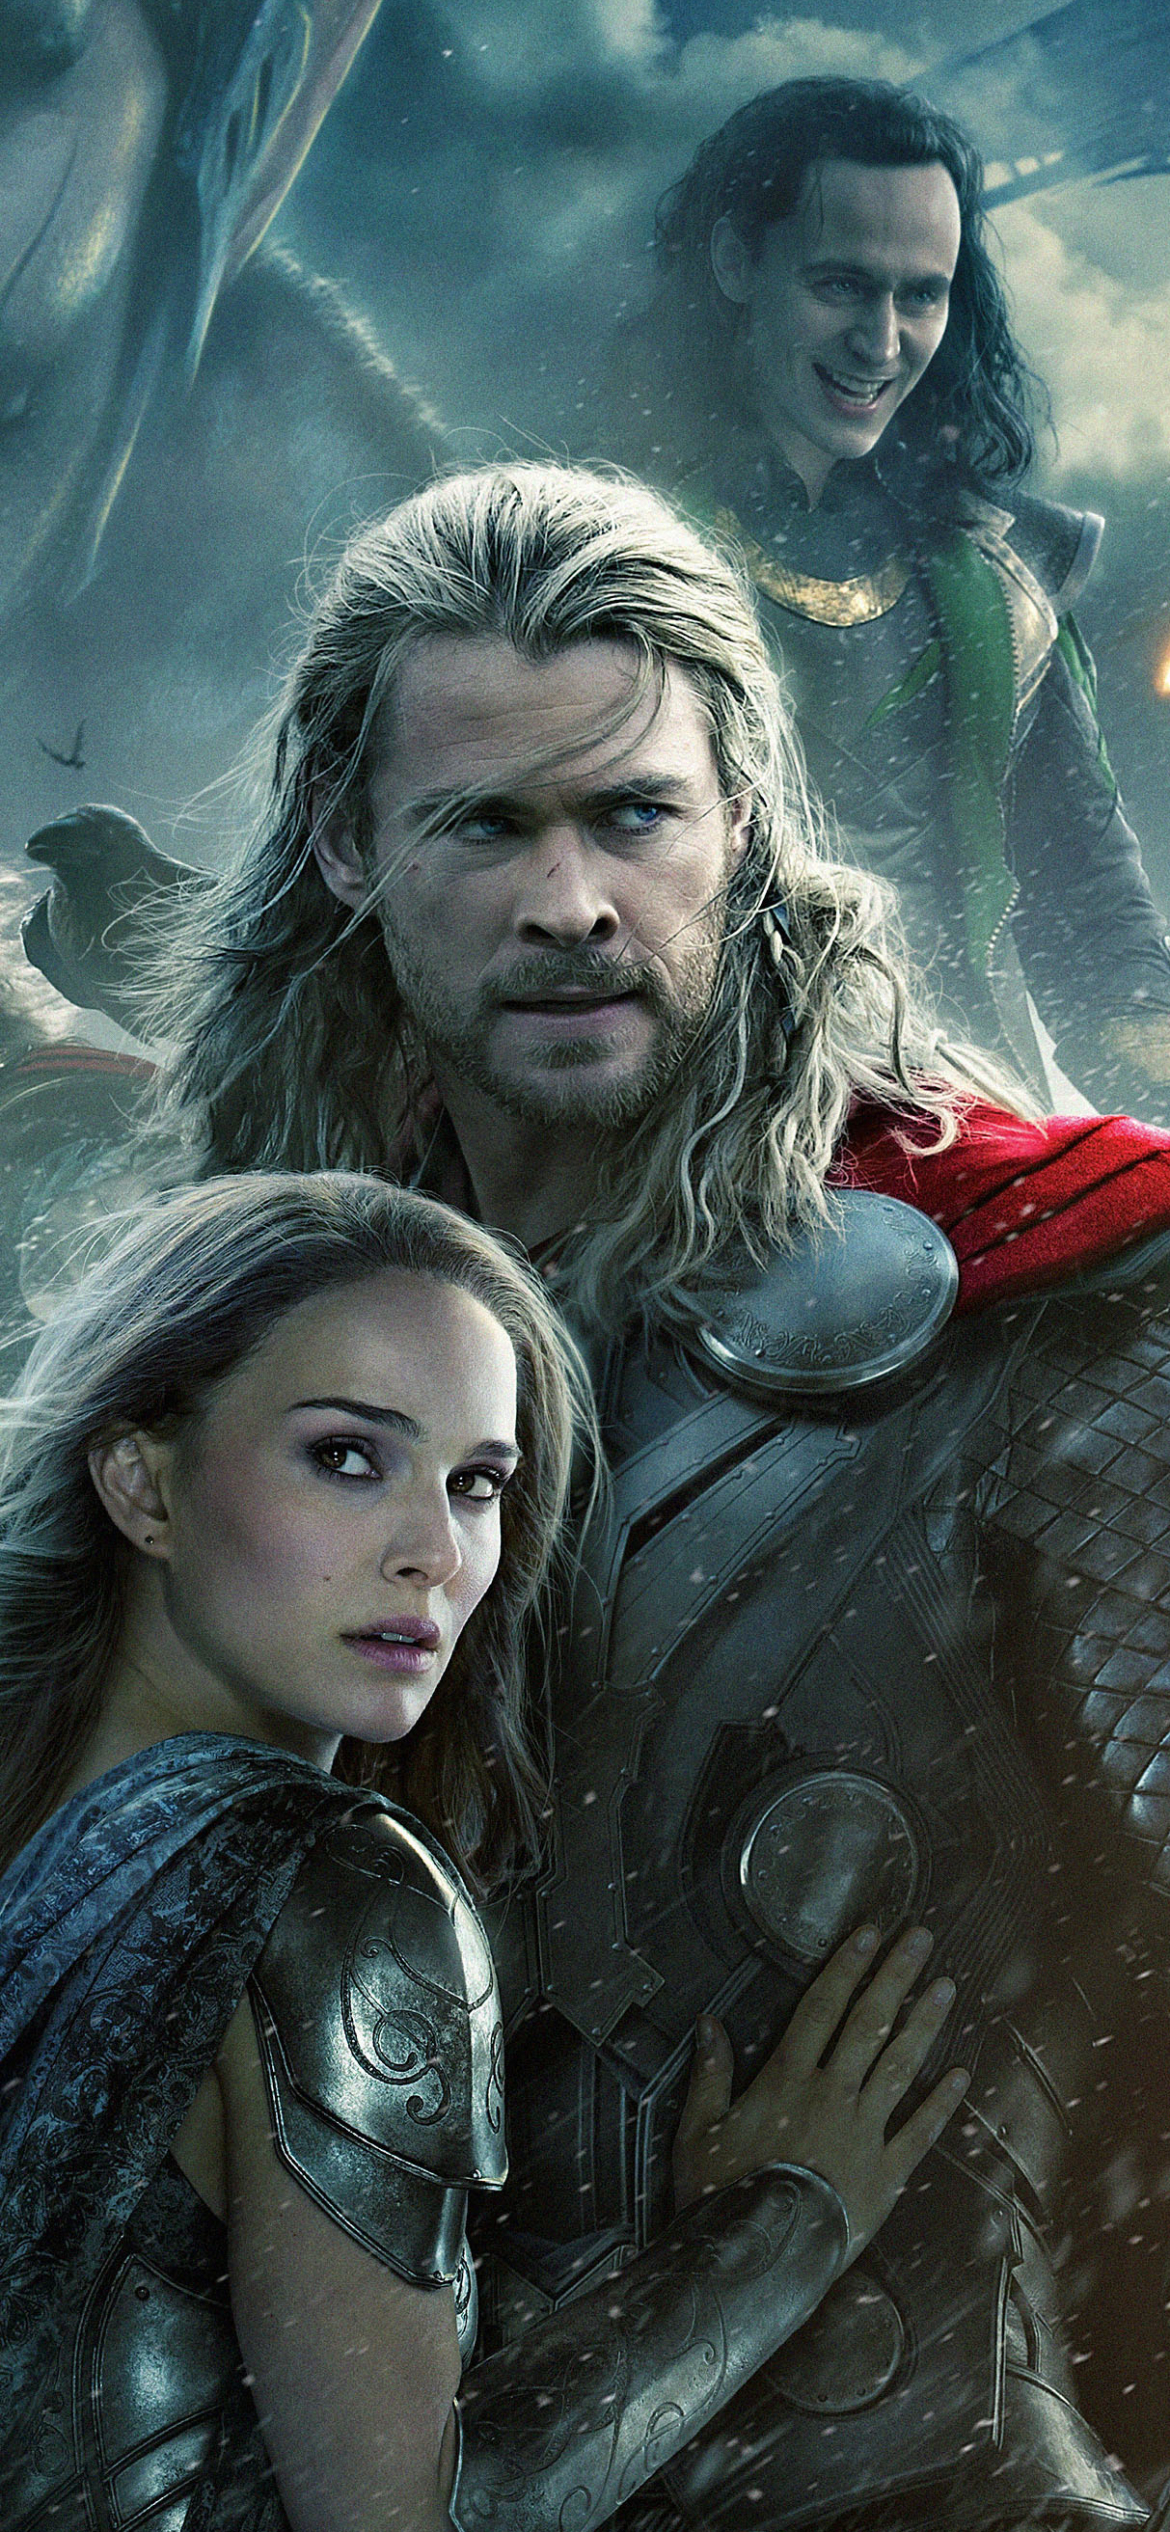 Descarga gratuita de fondo de pantalla para móvil de Natalie Portman, Películas, Thor, Loki (Marvel Cómics), Chris Hemsworth, Tom Hiddleston, Jane Fomentar, Thor: El Mundo Oscuro.